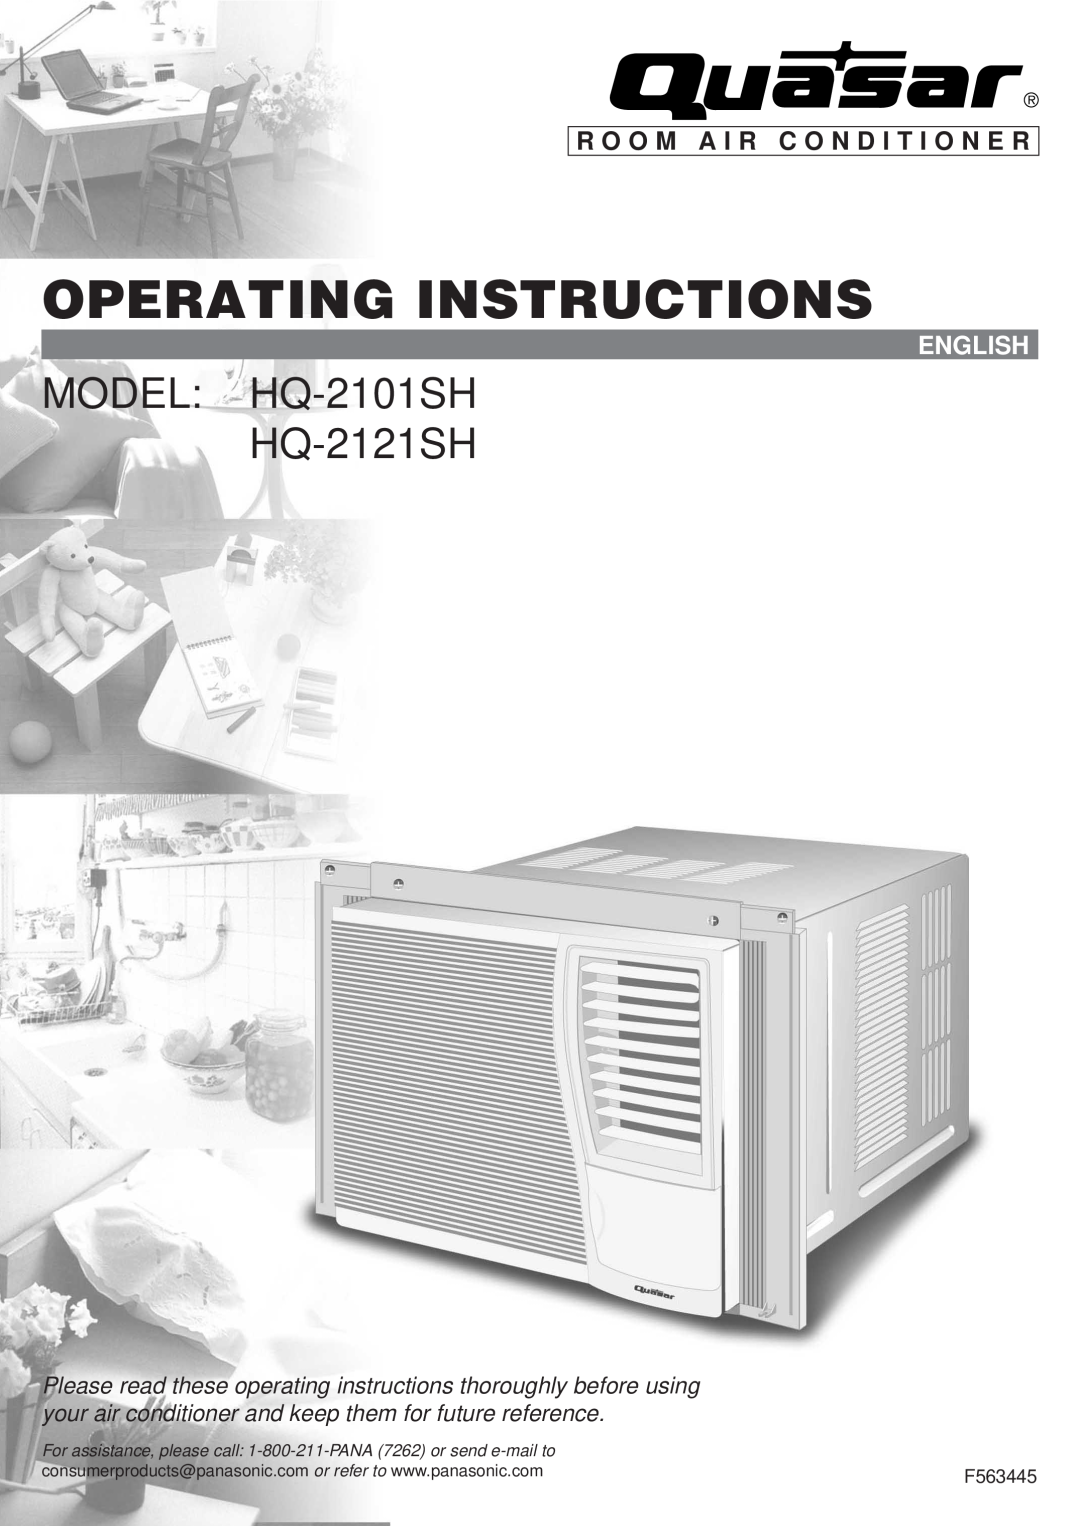 Panasonic operating instructions Operating Instructions, MODEL HQ-2101SH HQ-2121SH, R O O M A I R C O N D I T I O N E R 